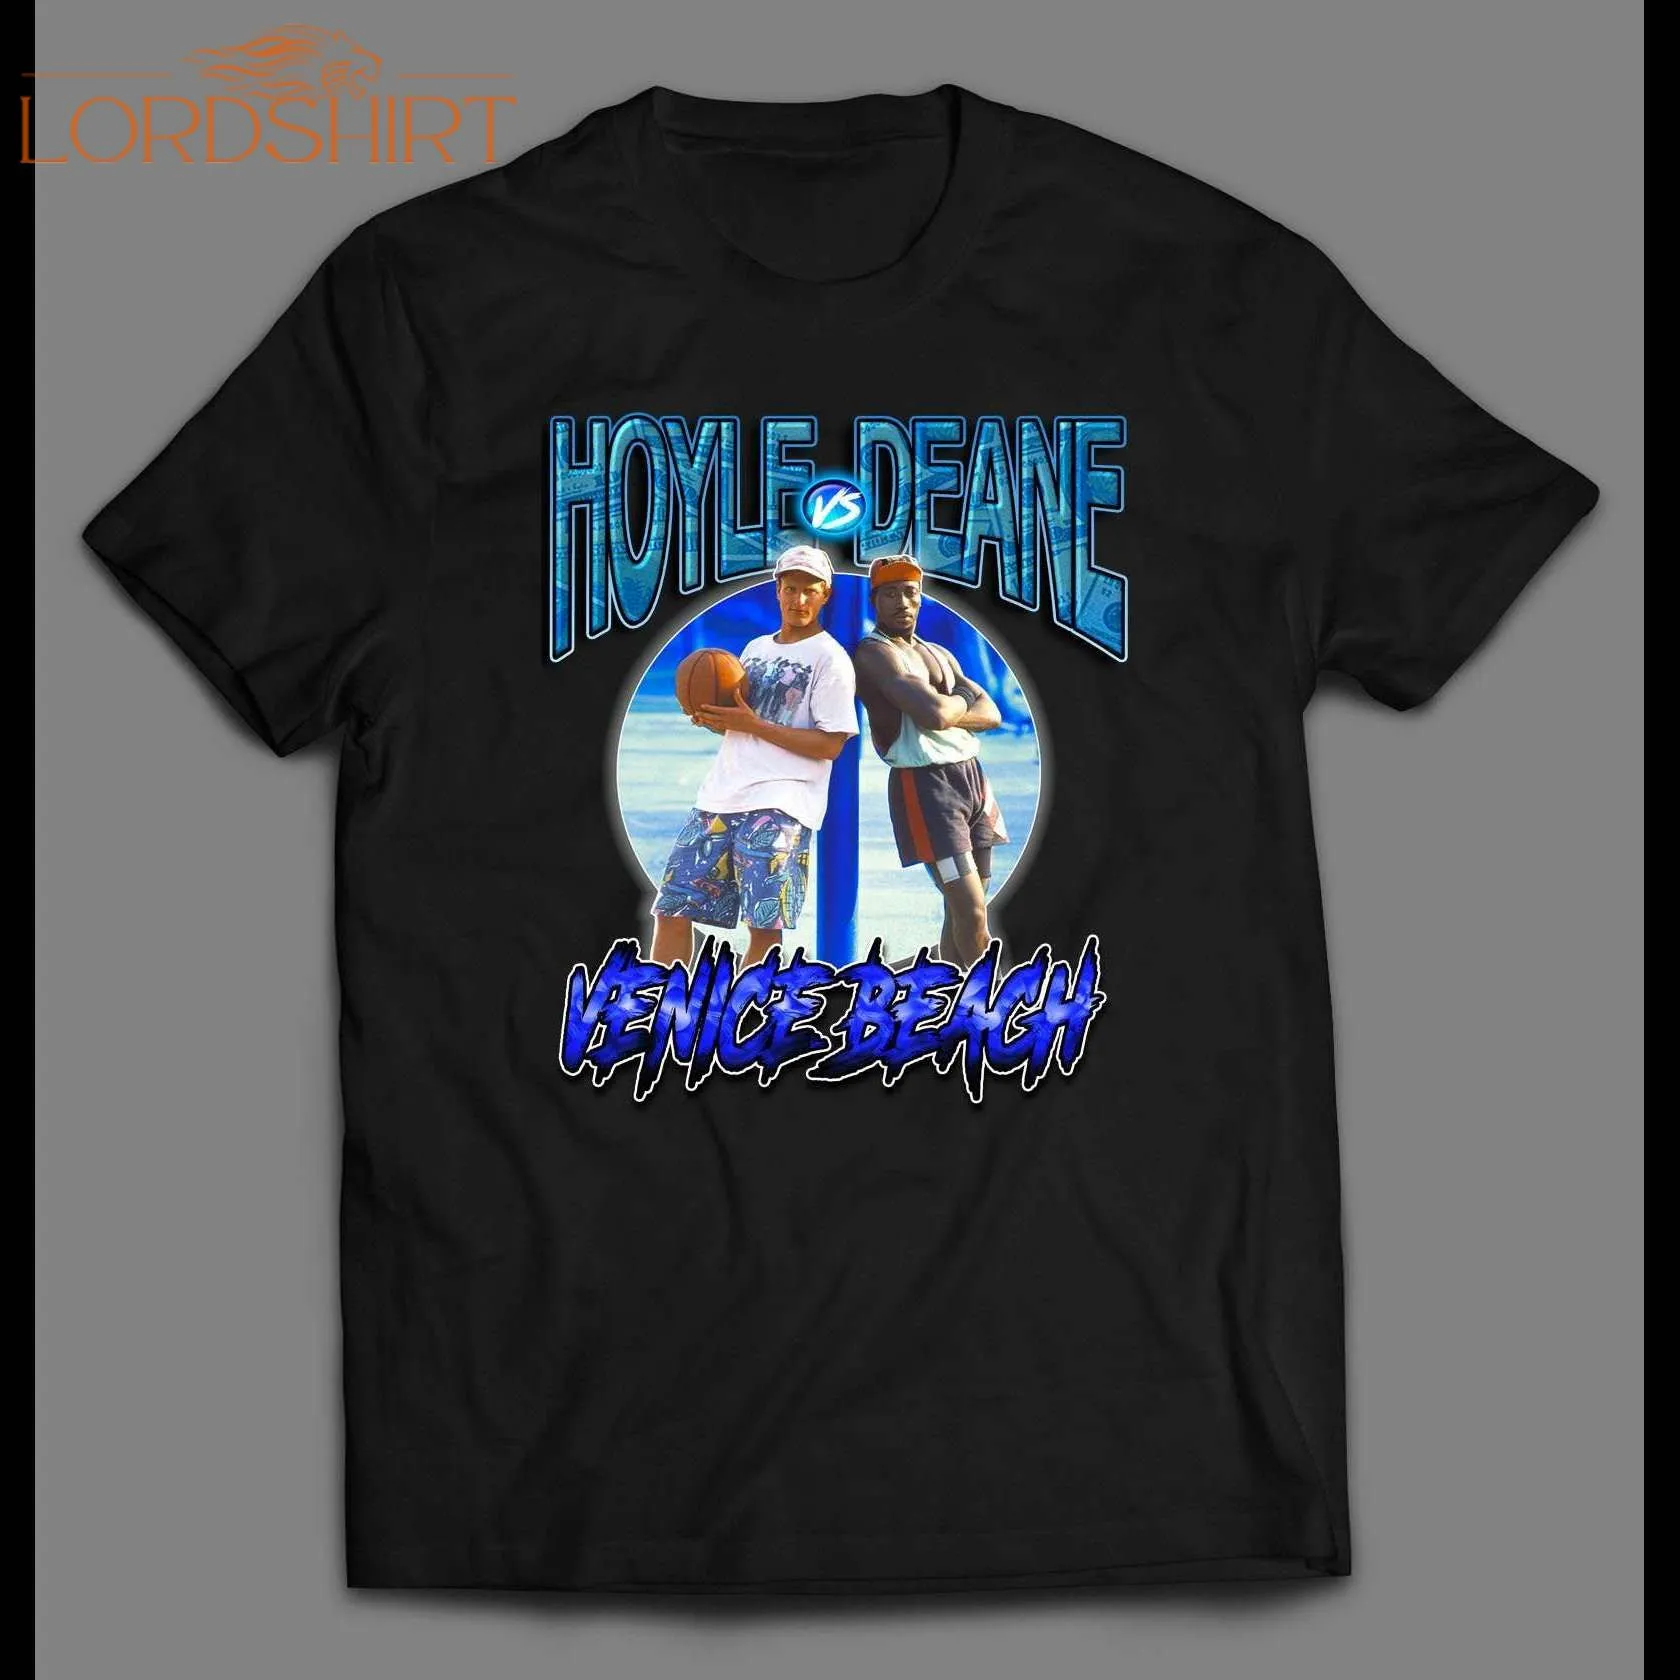 White Men Can't Jump Hoyle Vs Deane Venice Beach Bootleg Style Shirt